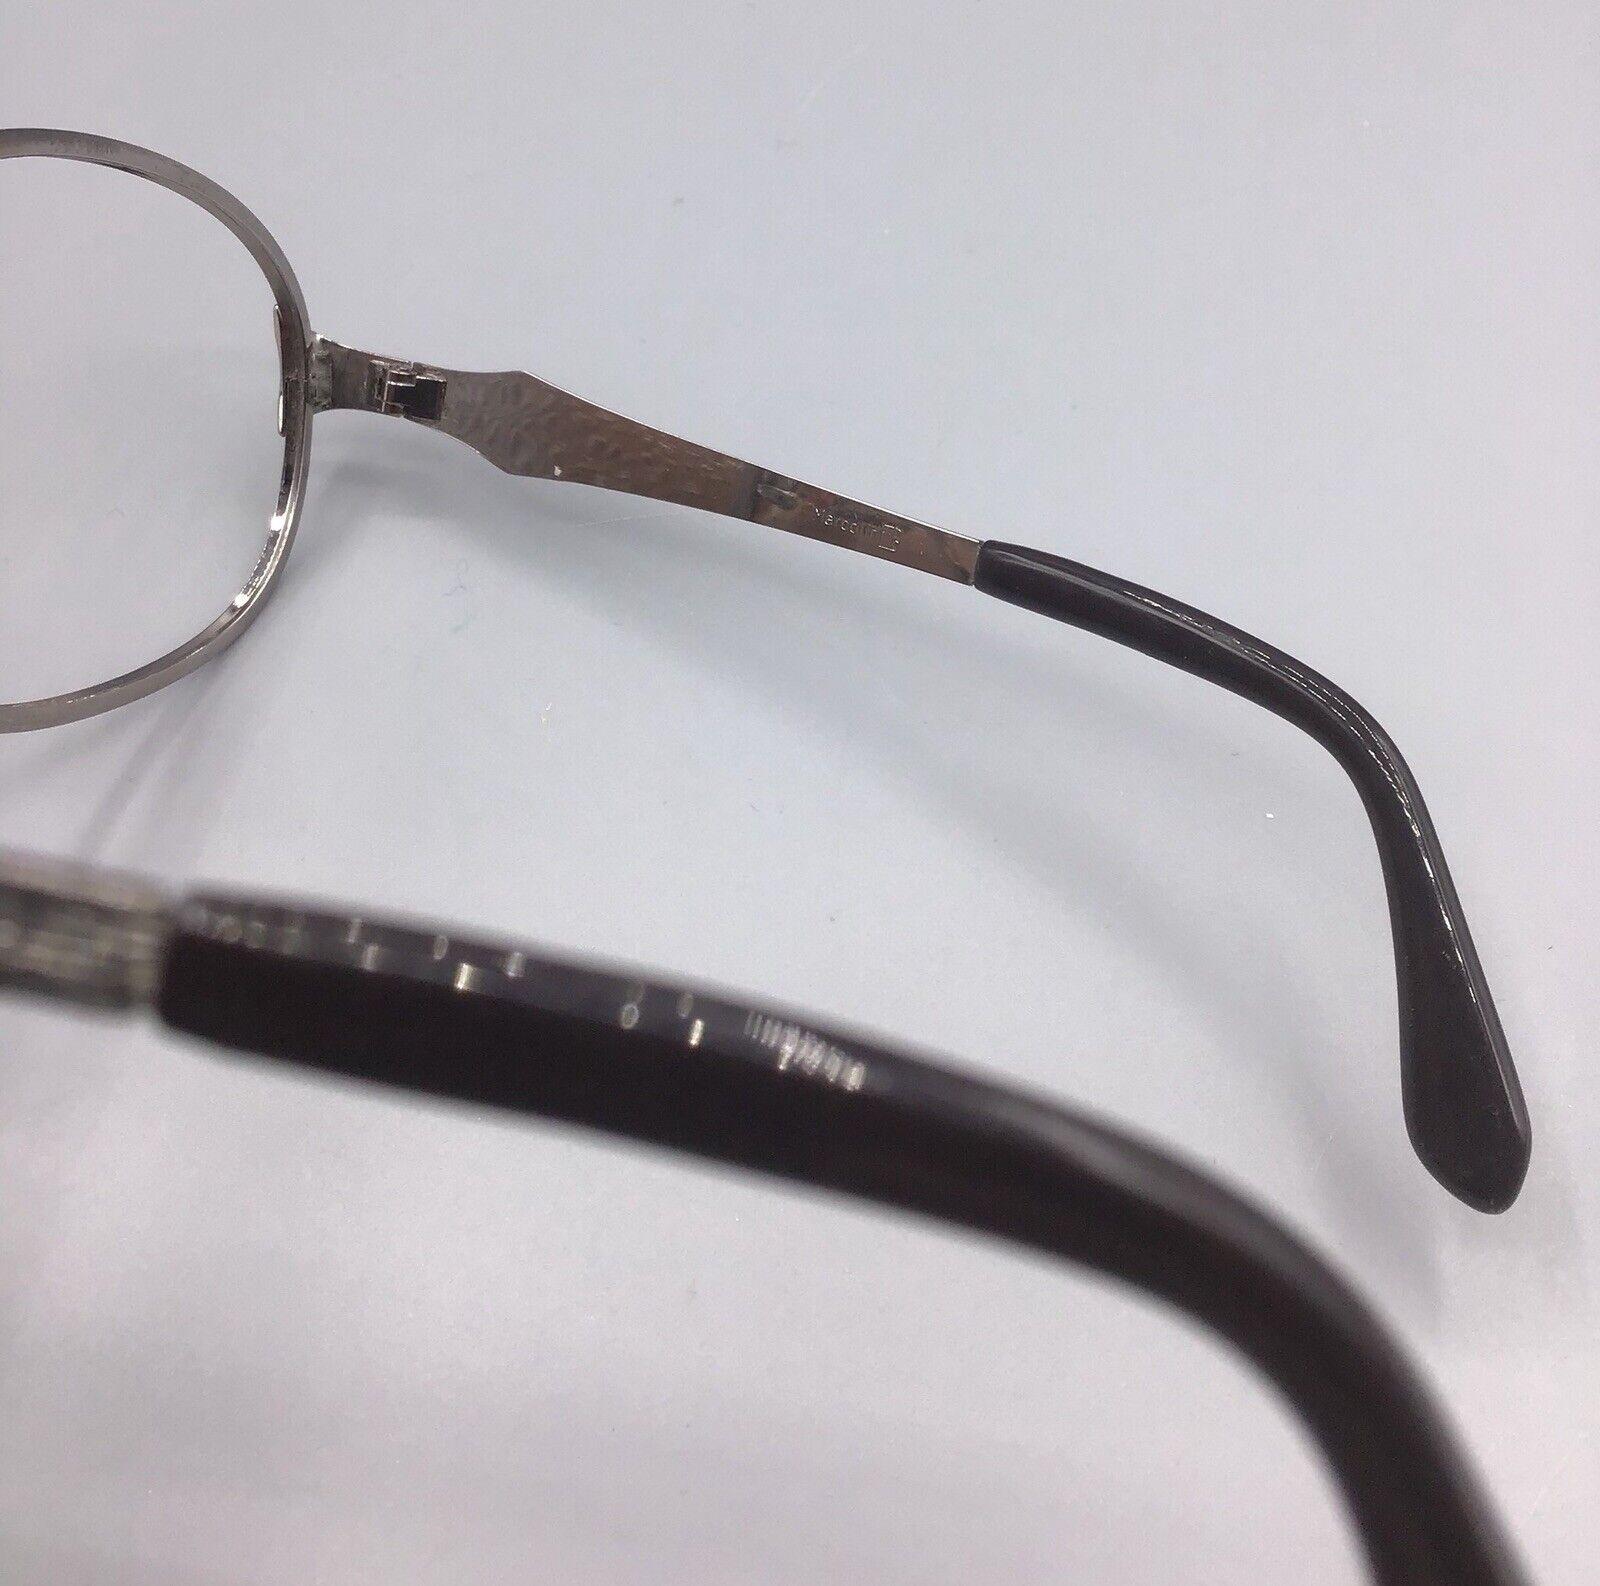 Marcolin occhiale Eyewear Frame vintage lunettes Brillen Silver color